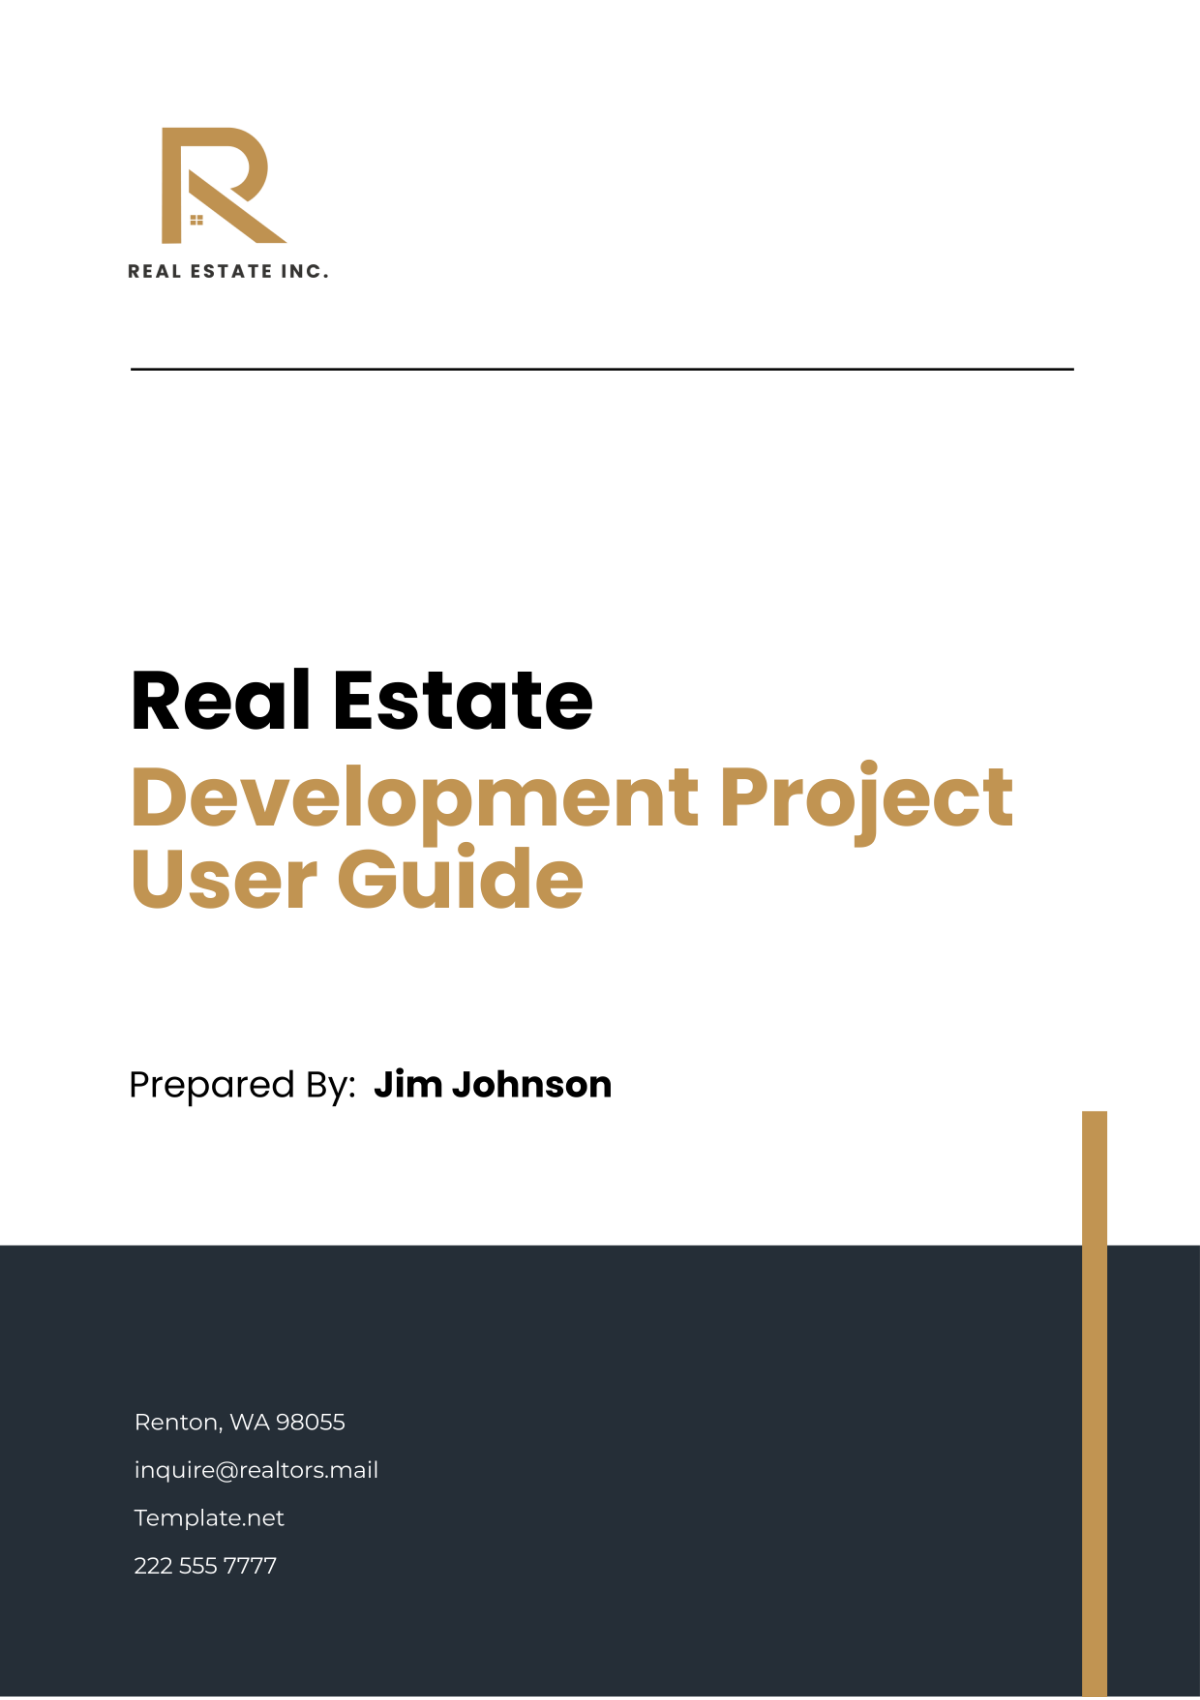 Real Estate Development Project User Guide Template